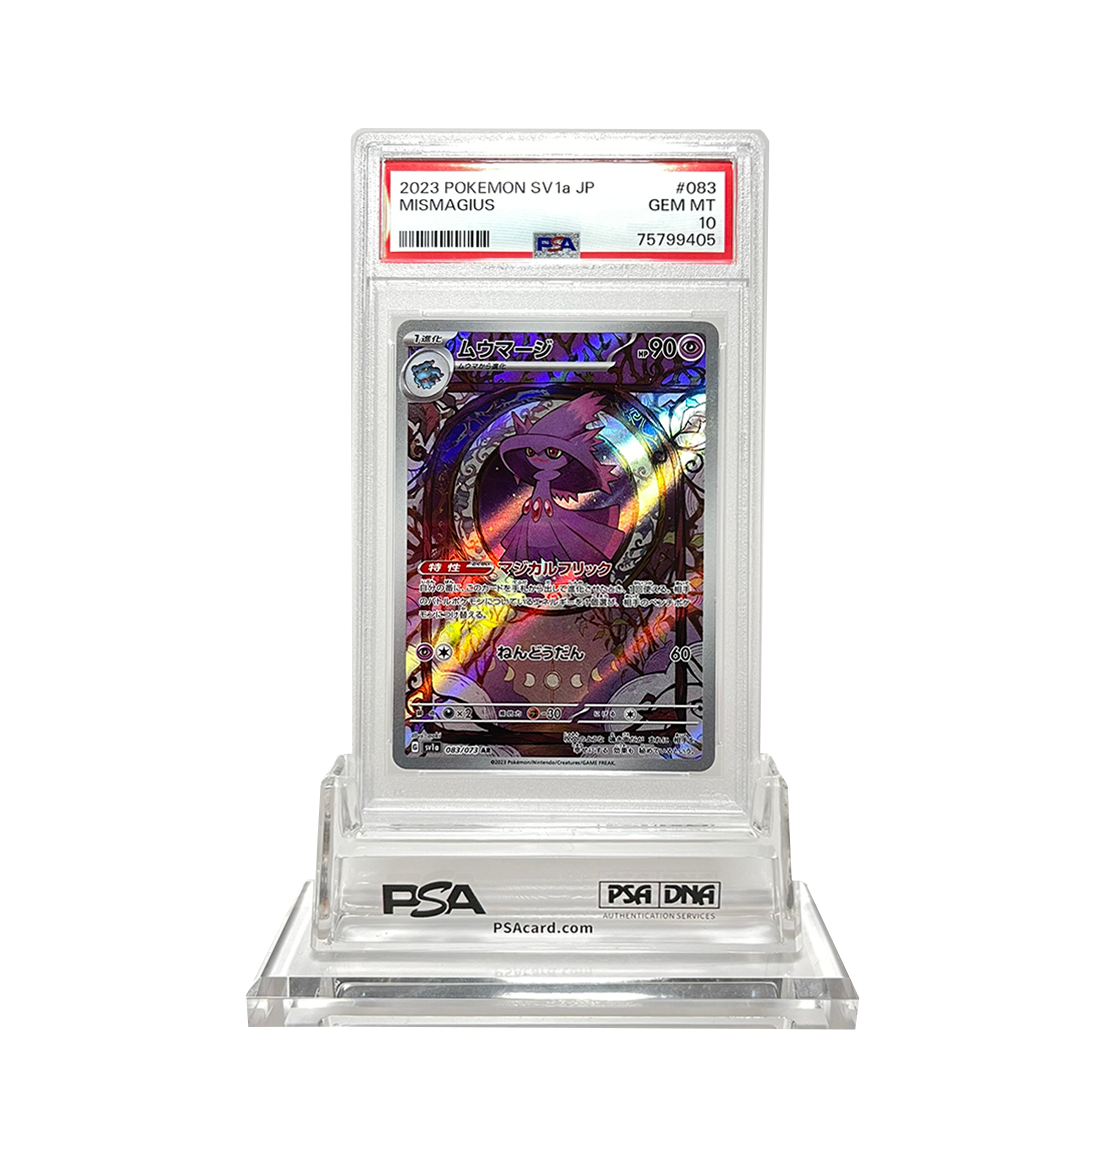 PSA 10 Mismagius 083 Triplet Beat SV1a Japanese Pokemon card